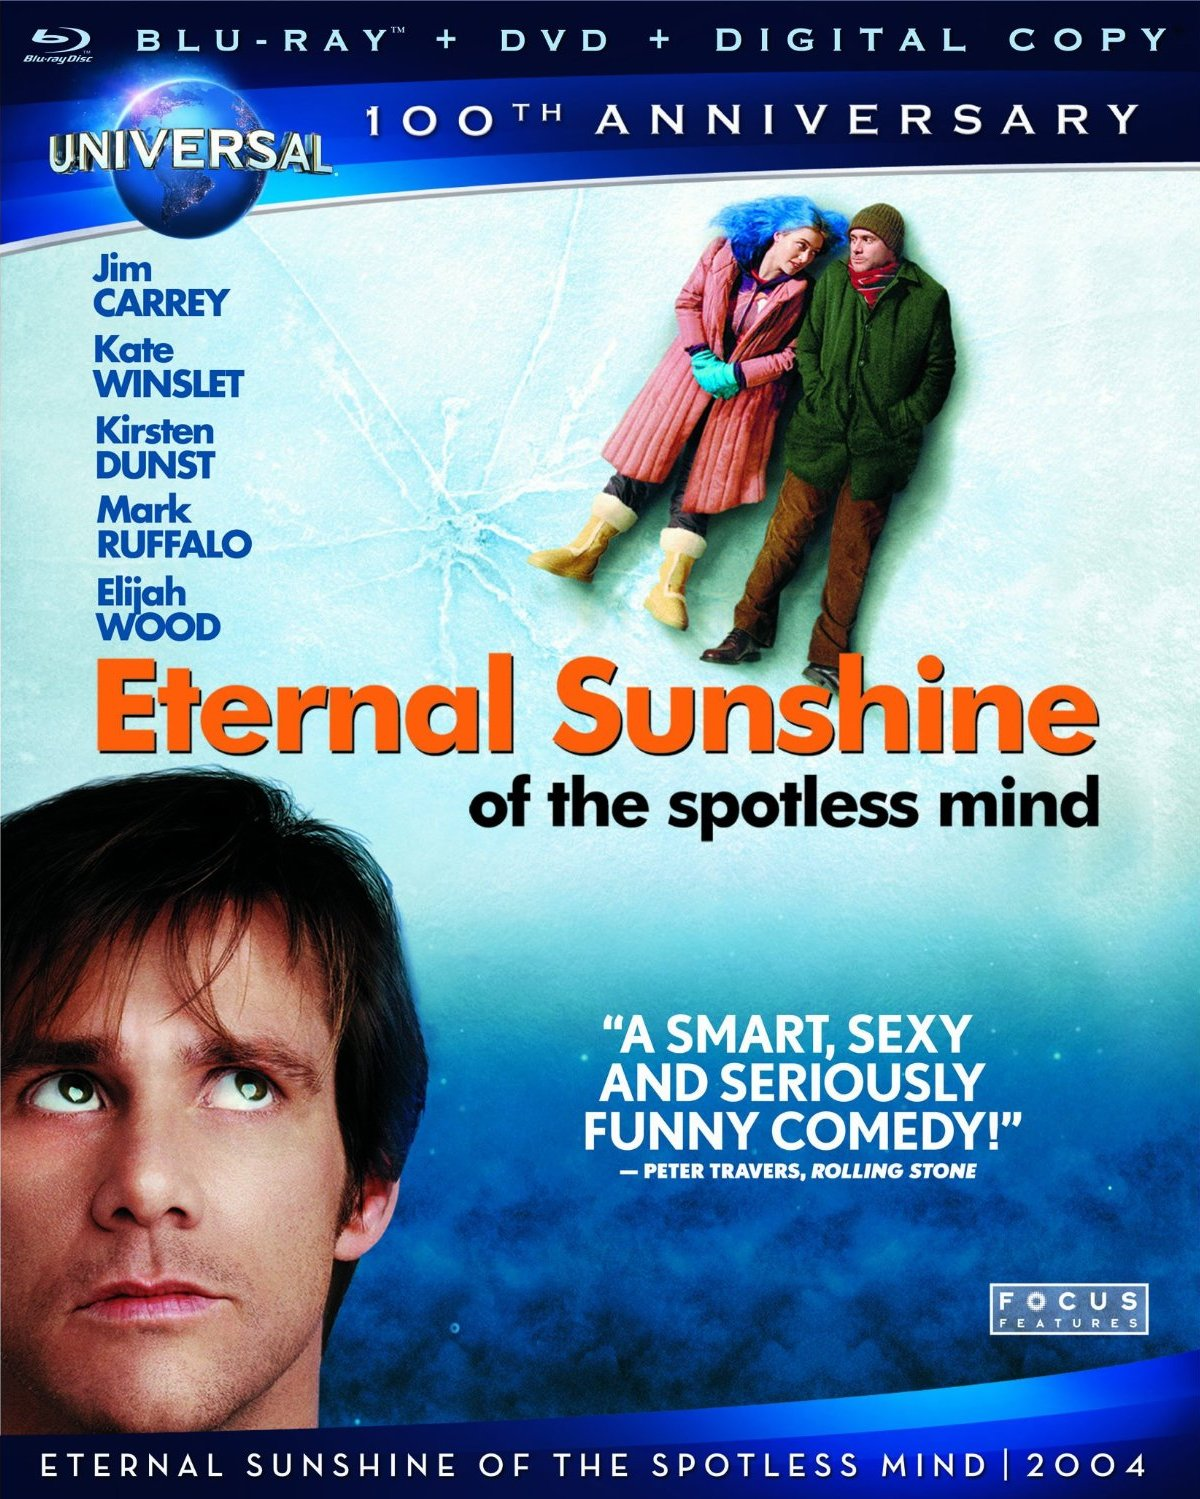 Eternal Sunshine of the Spotless Mind – Vidiots